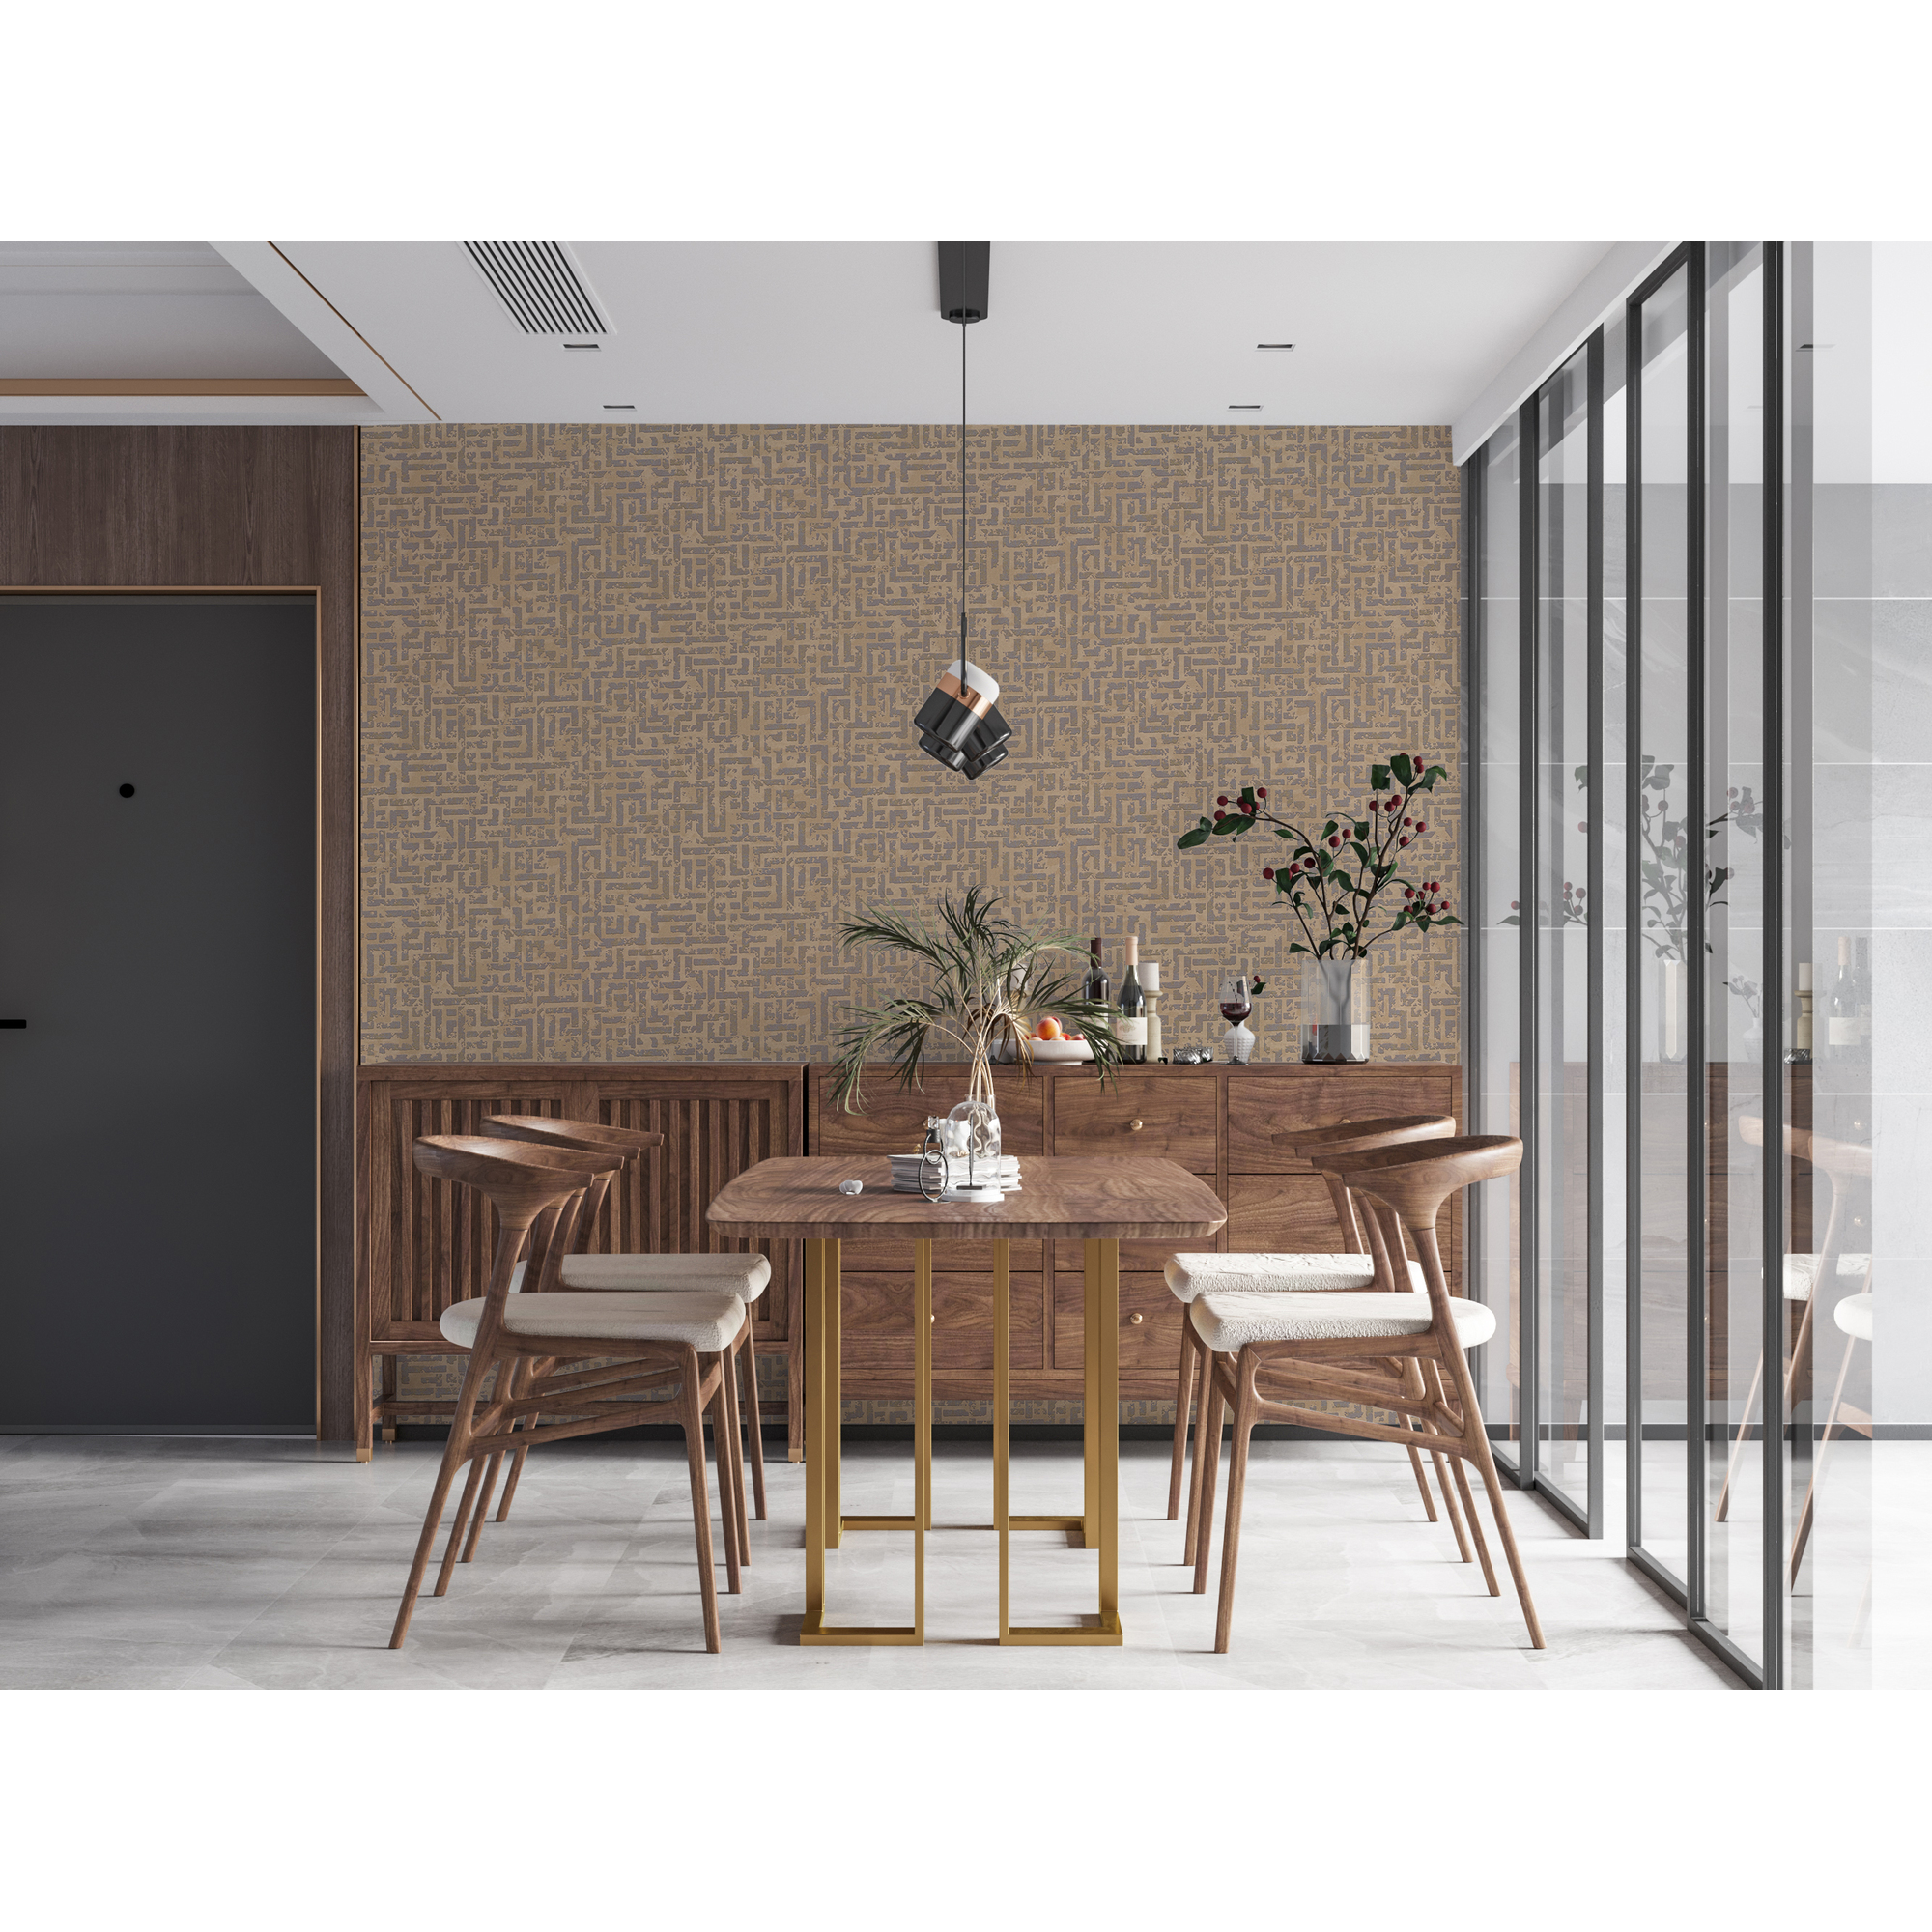 Vliestapete 'My Home. My Spa.' geometrisch braun/silber 10,05 x 0,53 m + product picture